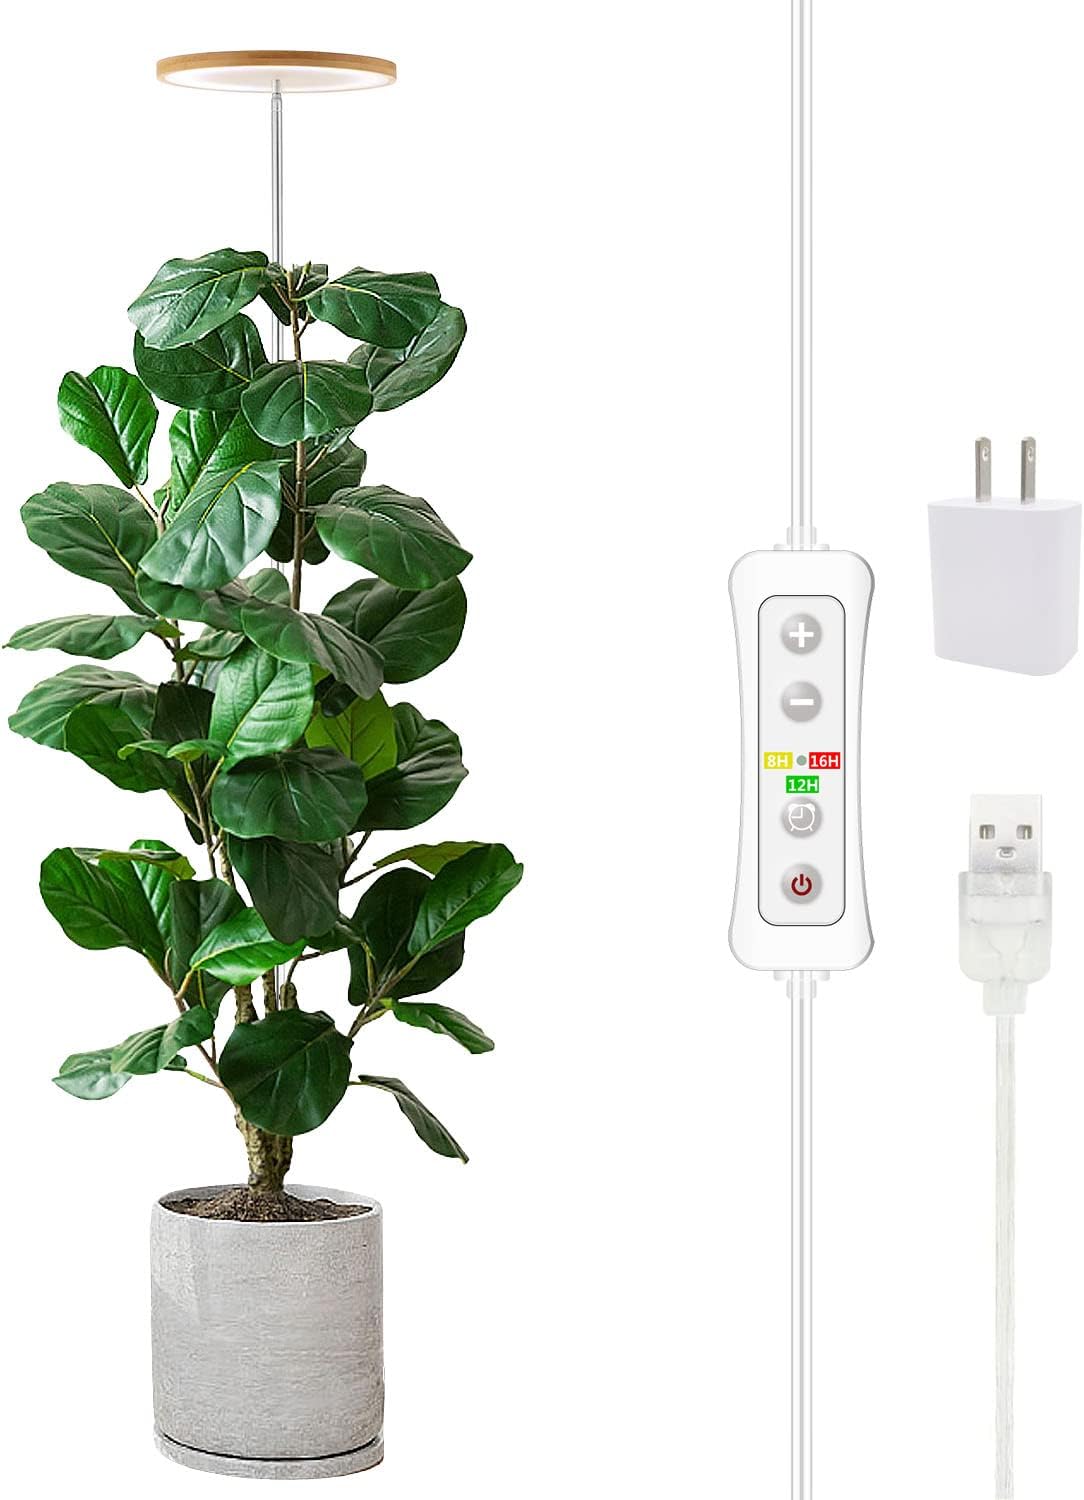 Plant Grow Light by Yadoker LED Growing Light Full Spectrum for Indoor Plants